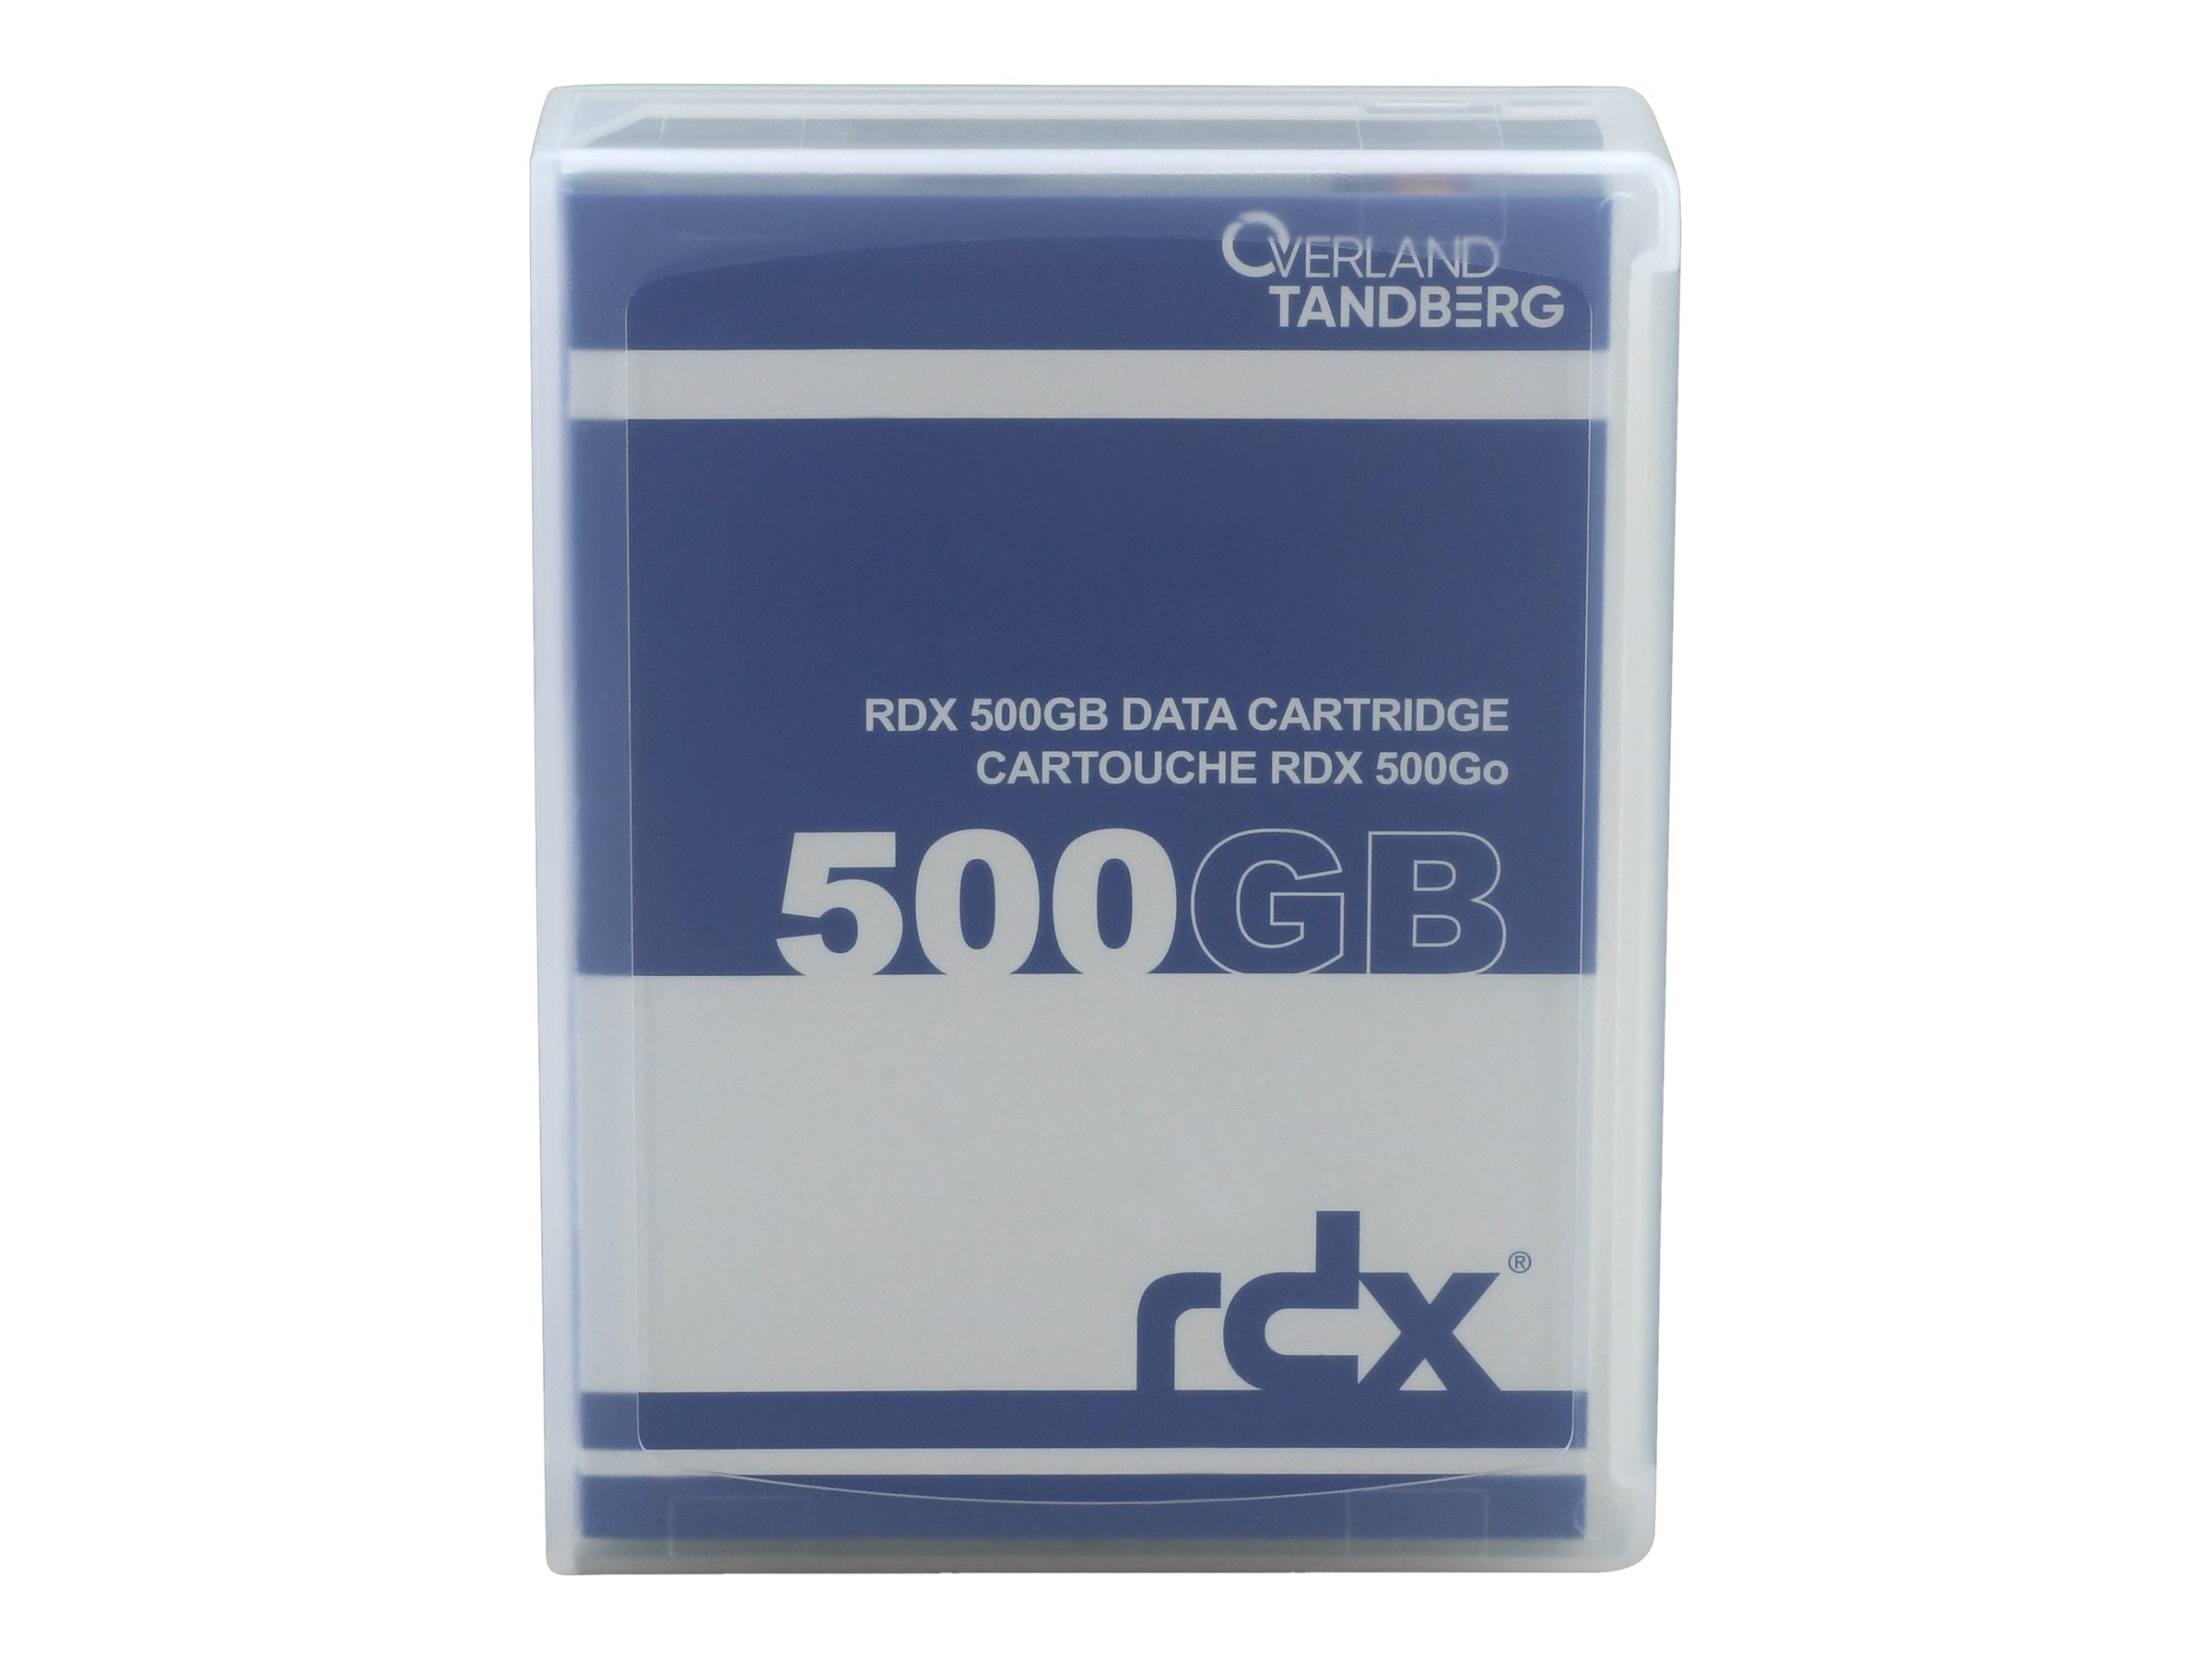 TANDBERG RDX 500GB Cartridge